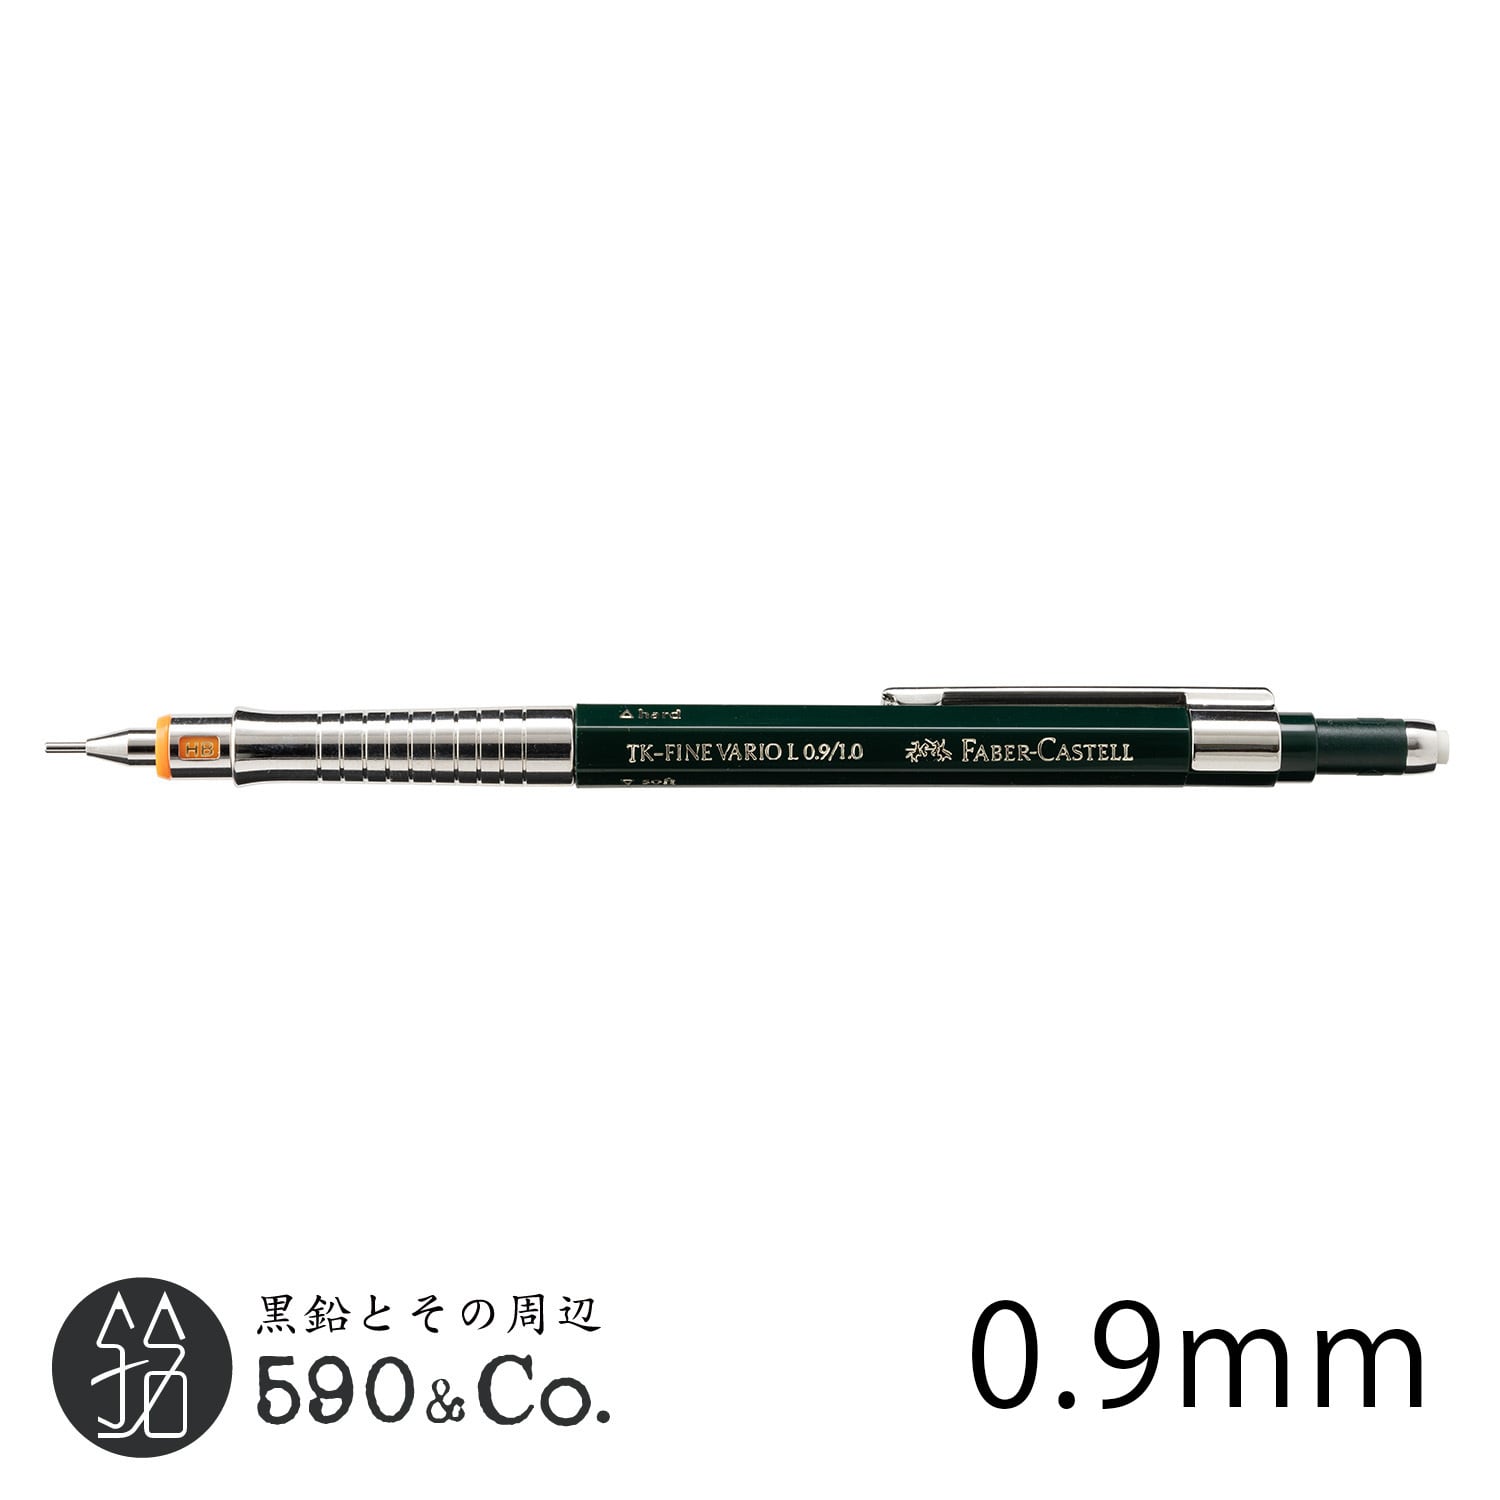 FABER-CASTELL/ファーバーカステル】TK-FINE バリオL 製図用シャープペンシル(0.9mm) 590Co.